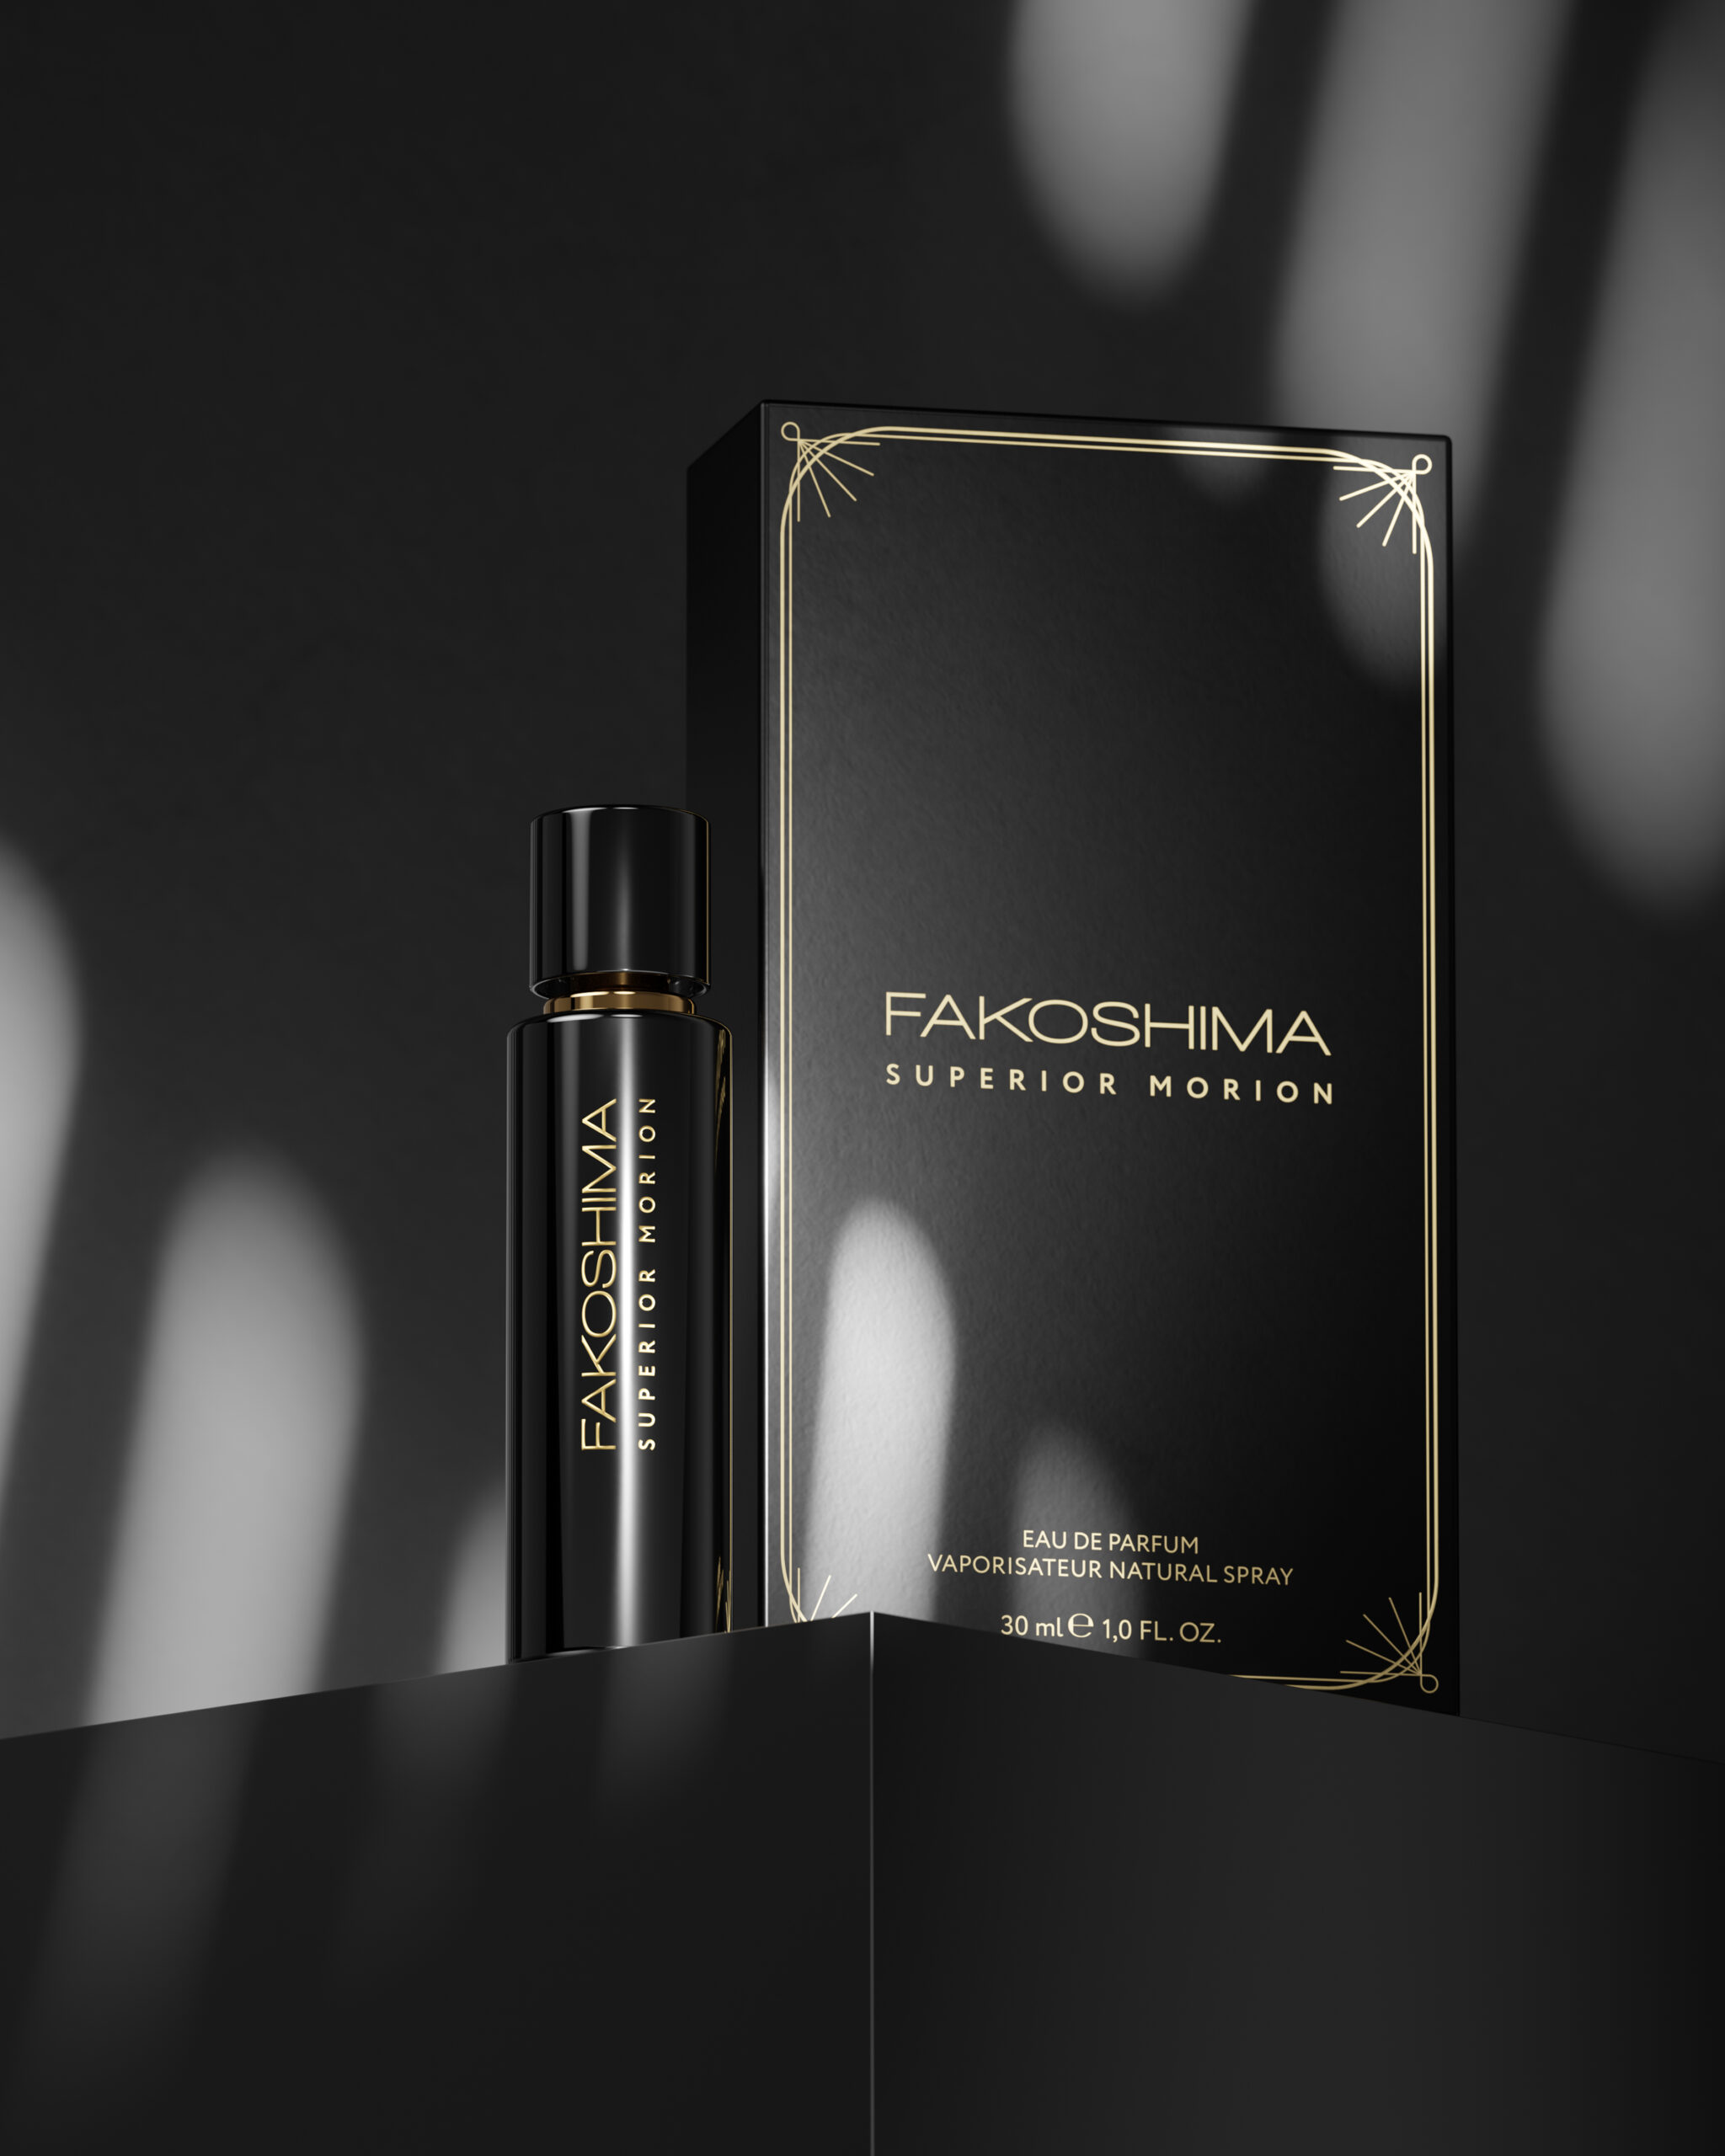 Fakoshima perfume